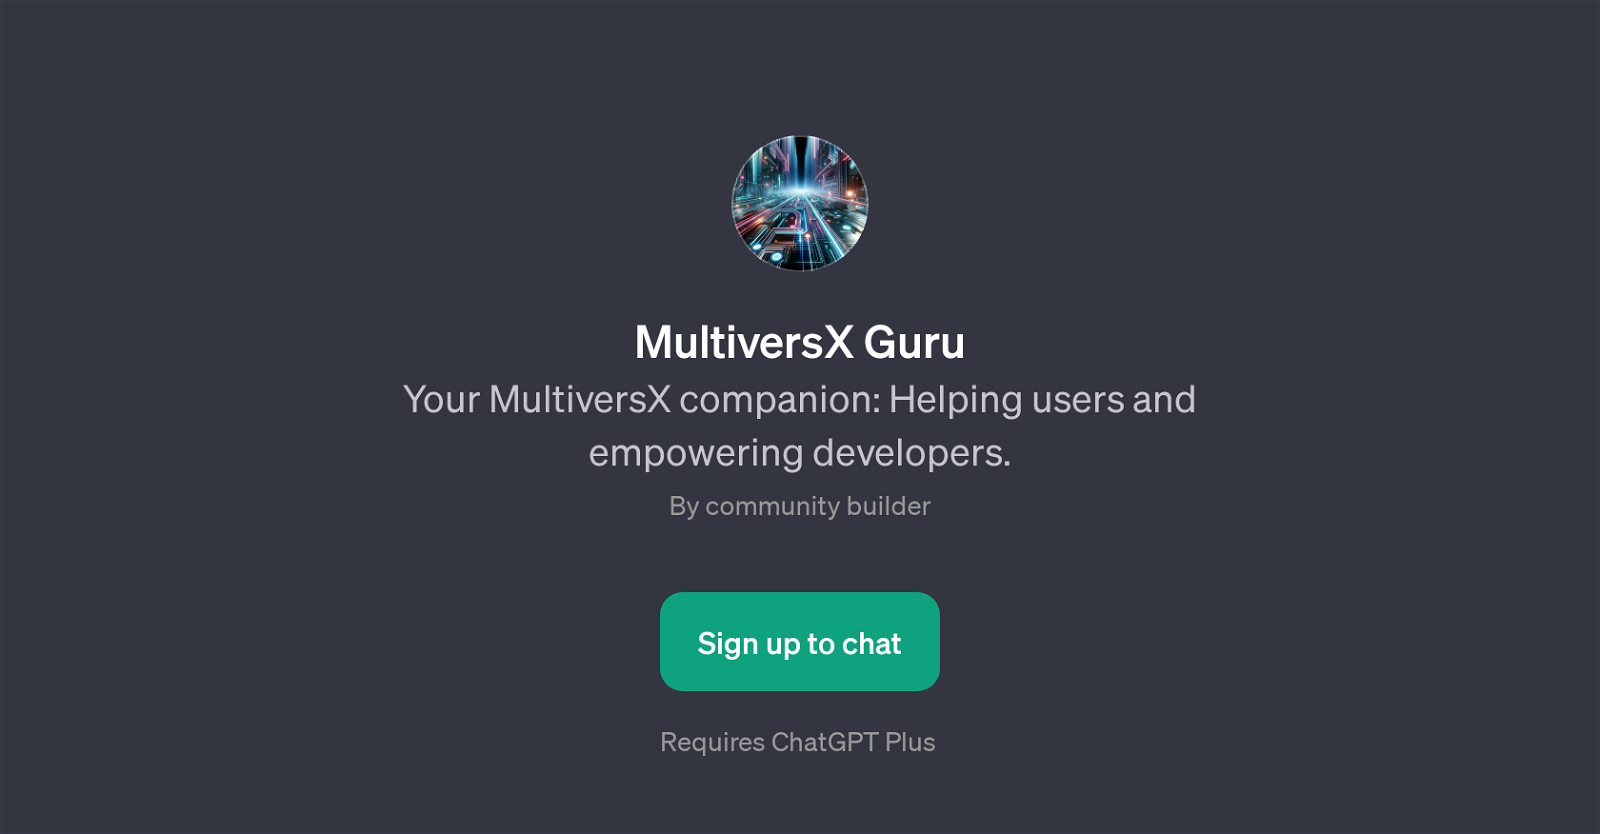 MultiversX Guru website